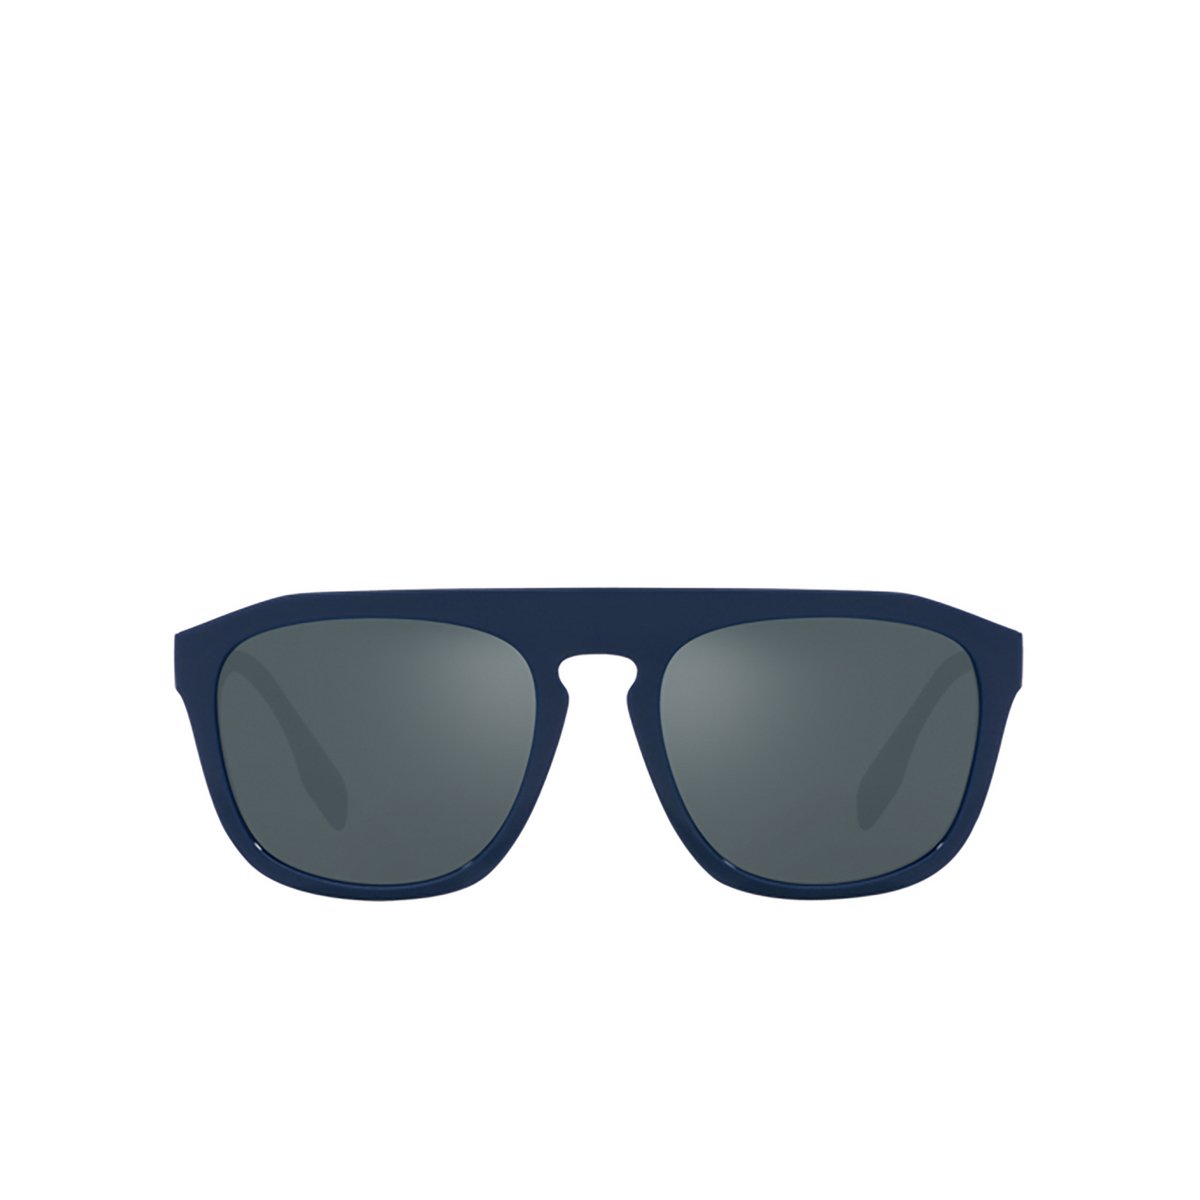 Burberry WREN Sunglasses 405825 Blue - front view